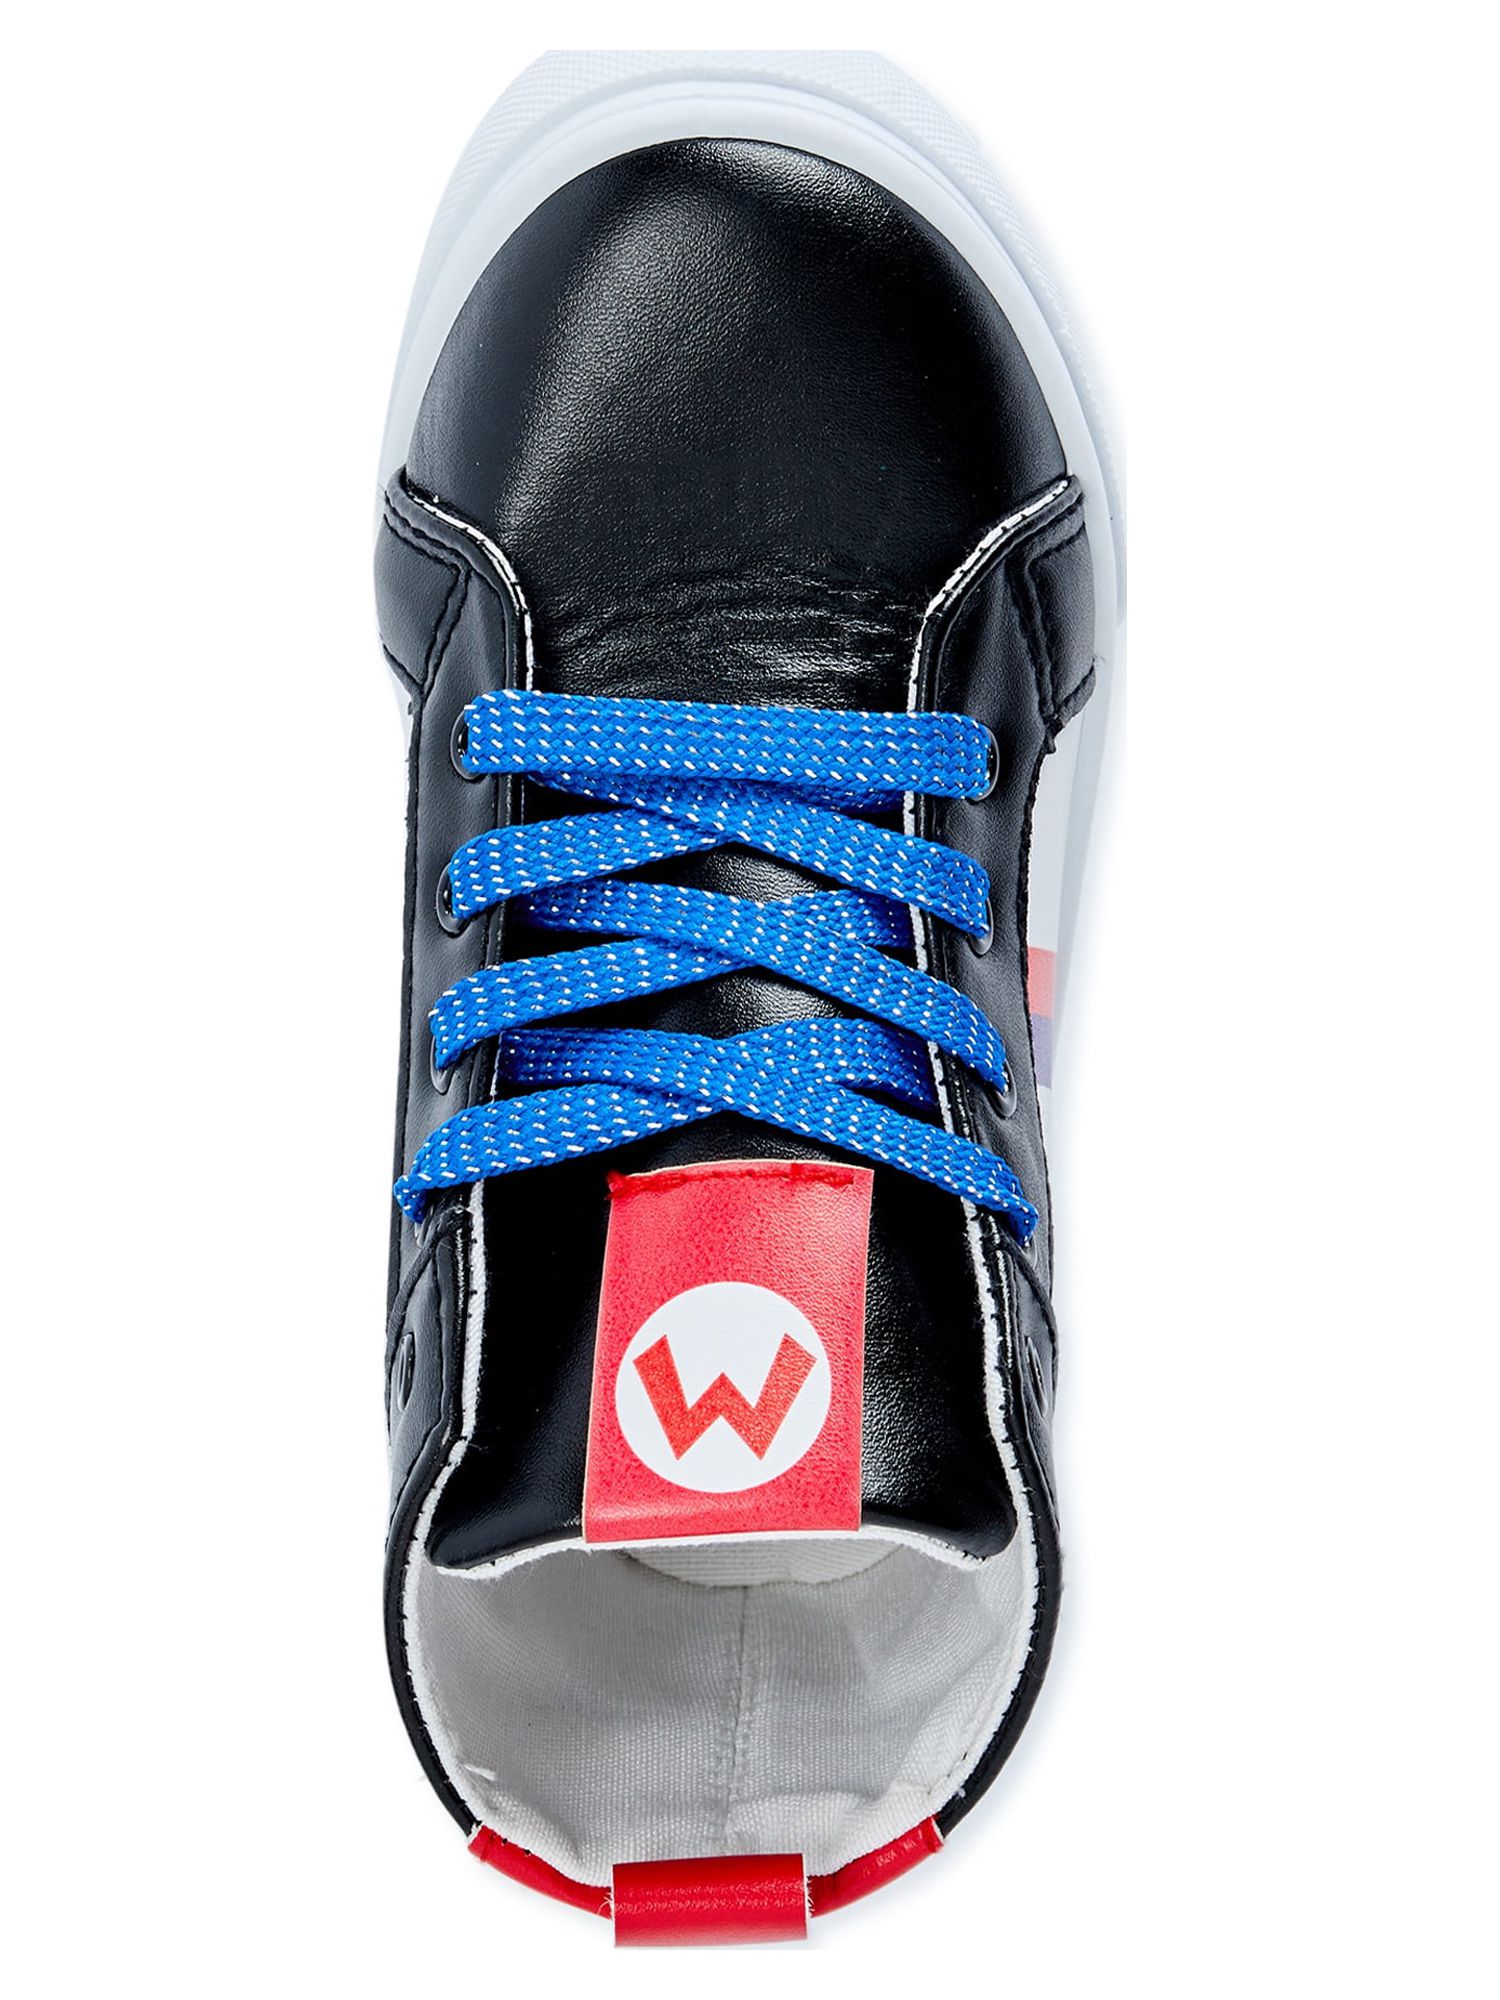 Mario Boys High Top Sneakers - image 5 of 6